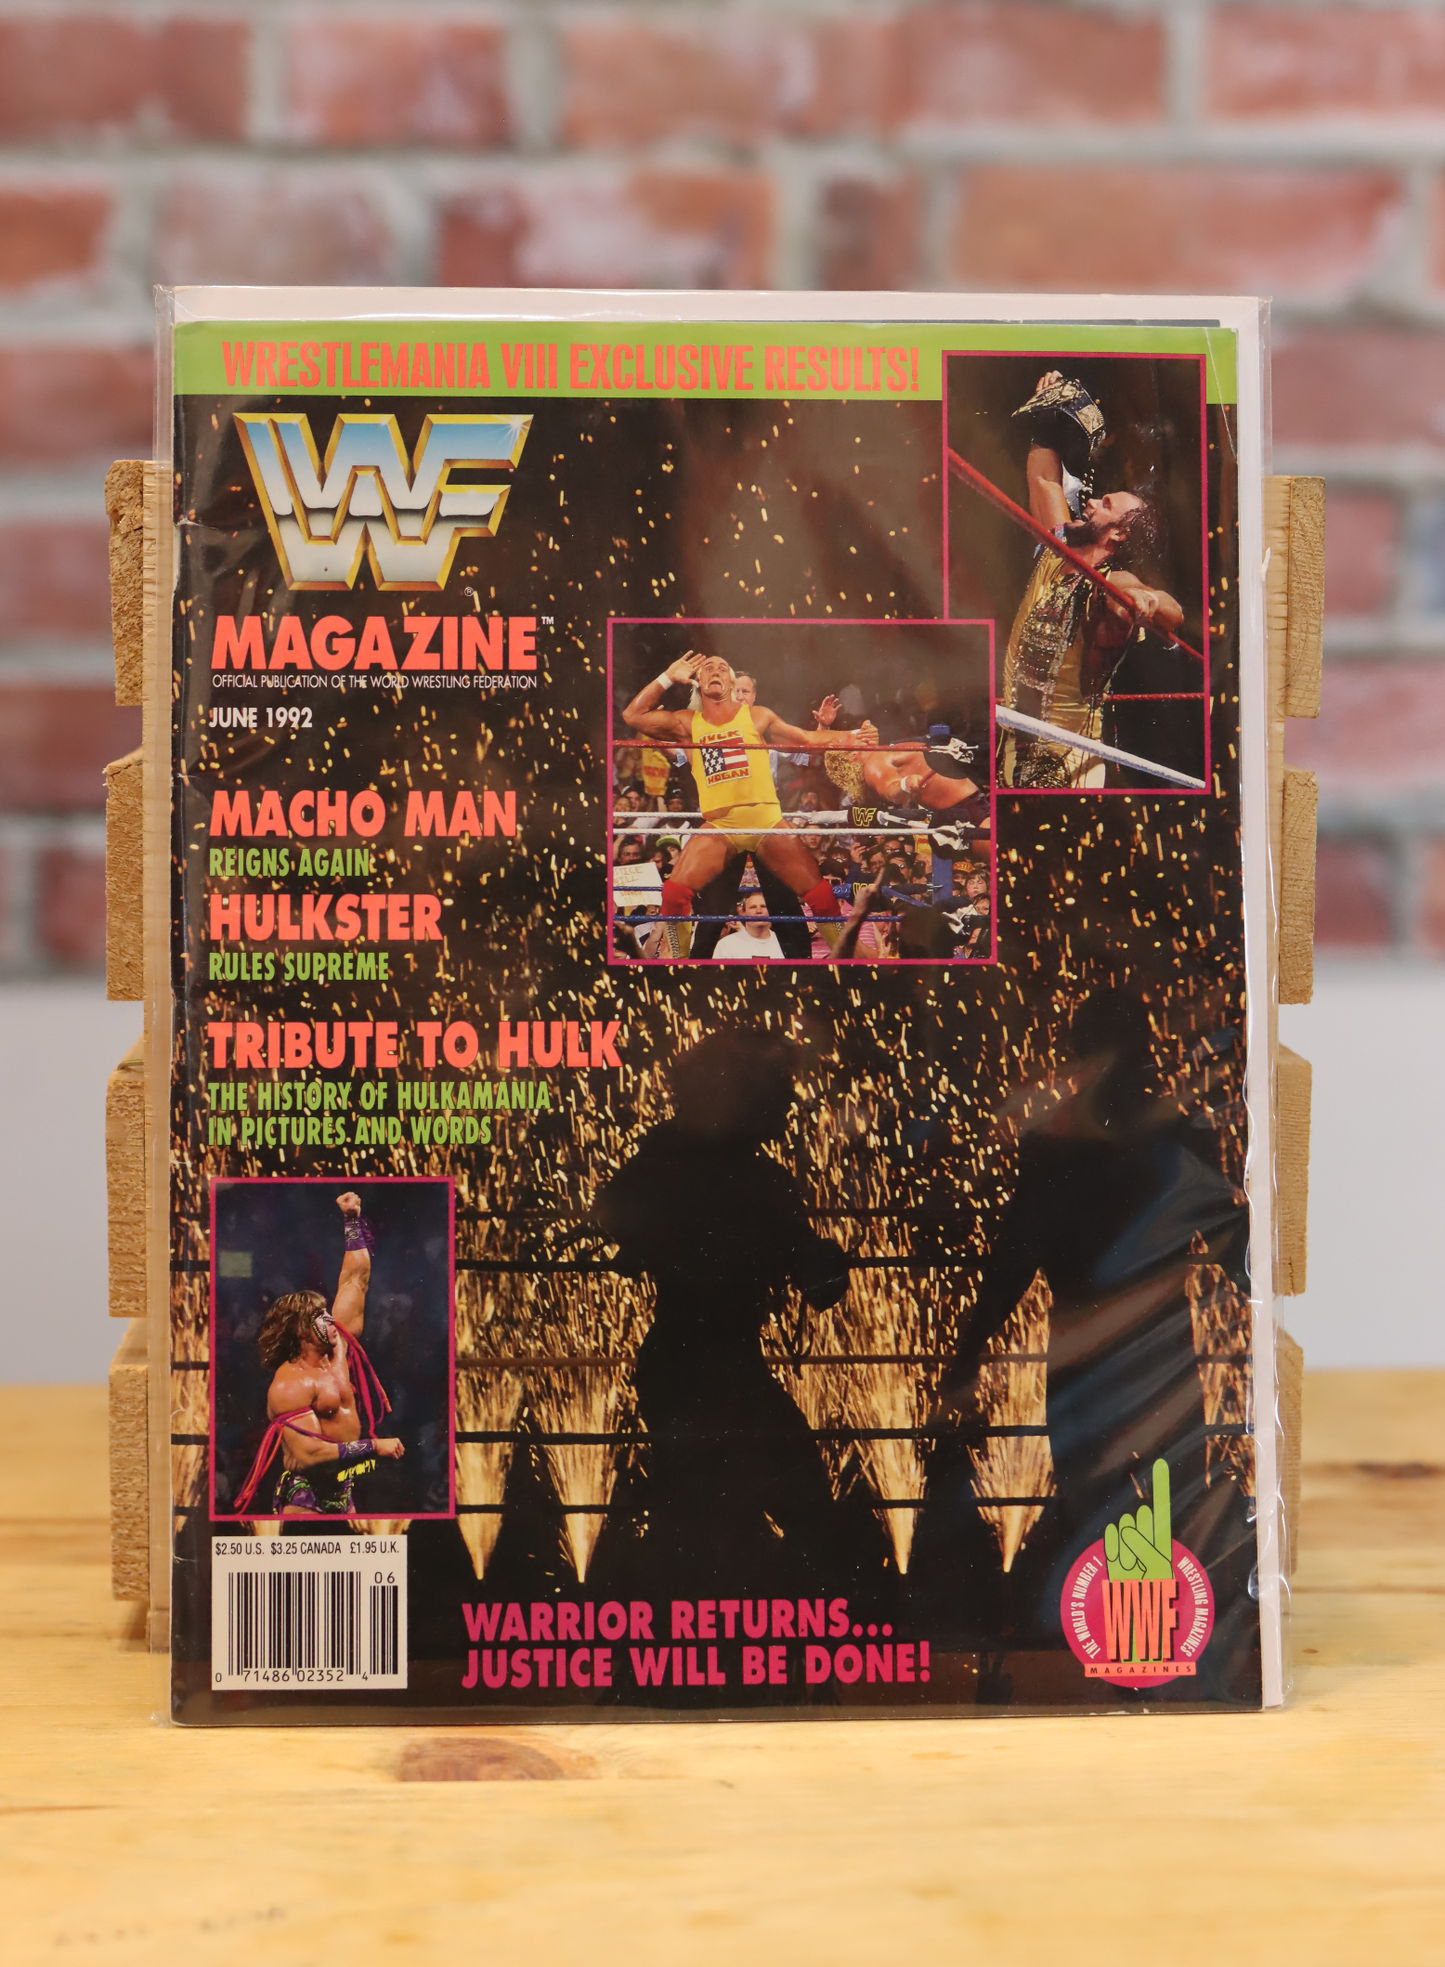 Original WWF WWE Vintage Wrestling Magazine Wrestlemania VIII Highlights (June 1992)